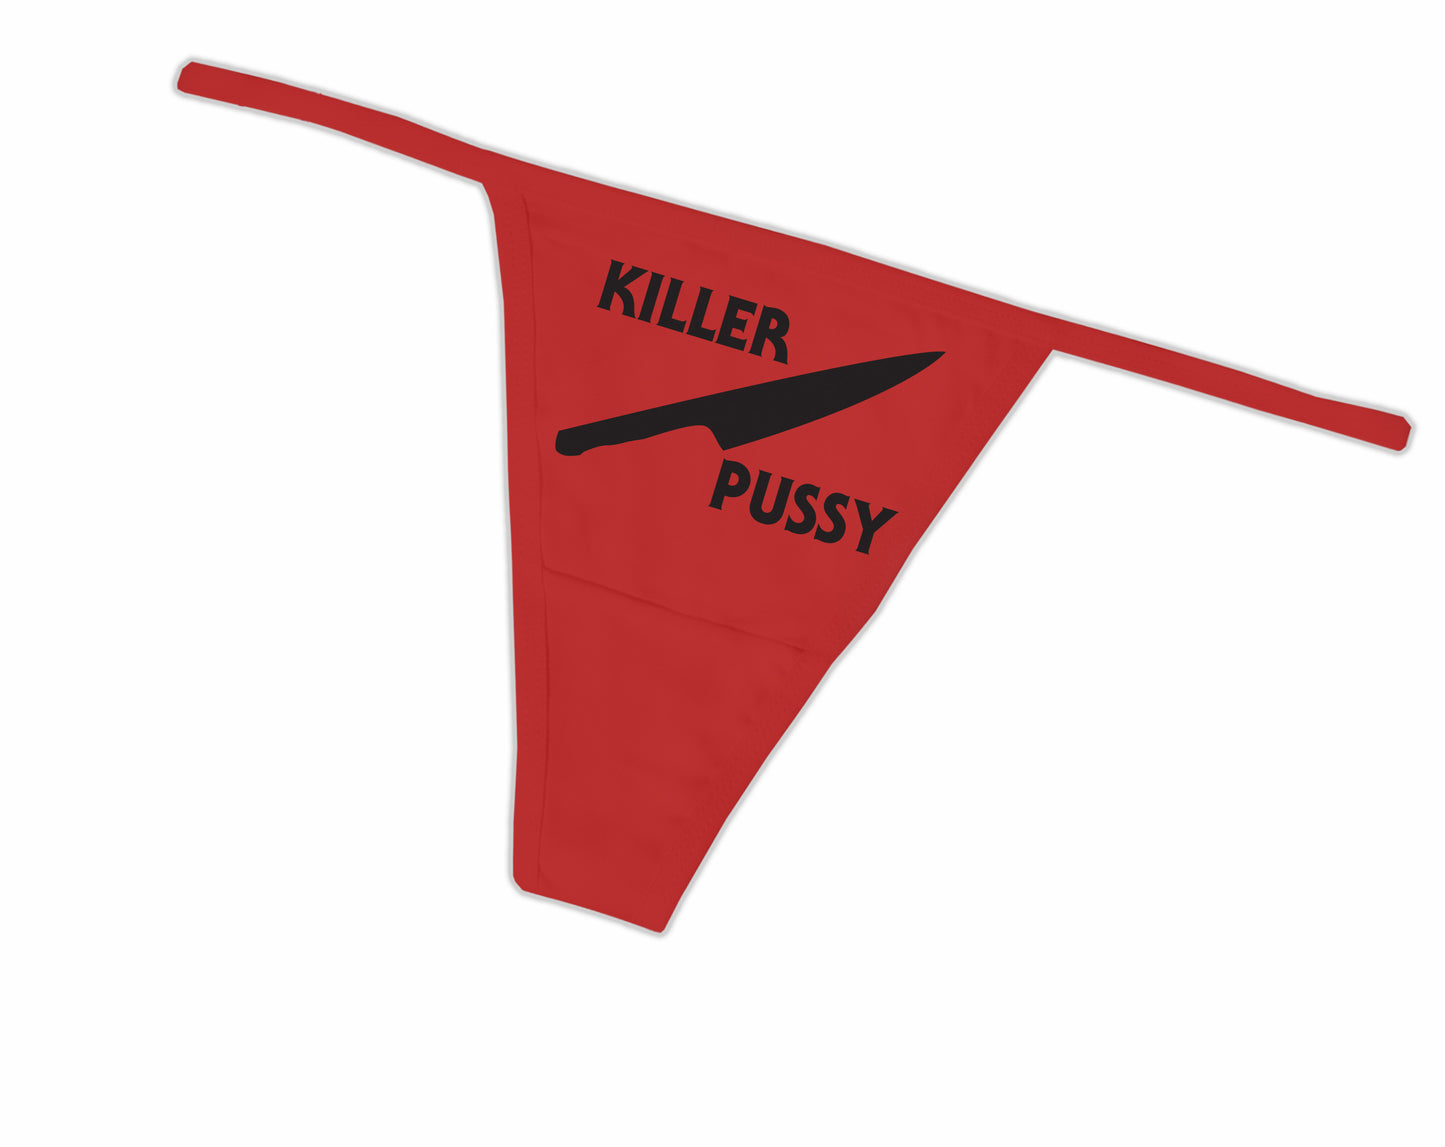 Killer Pussy Thong